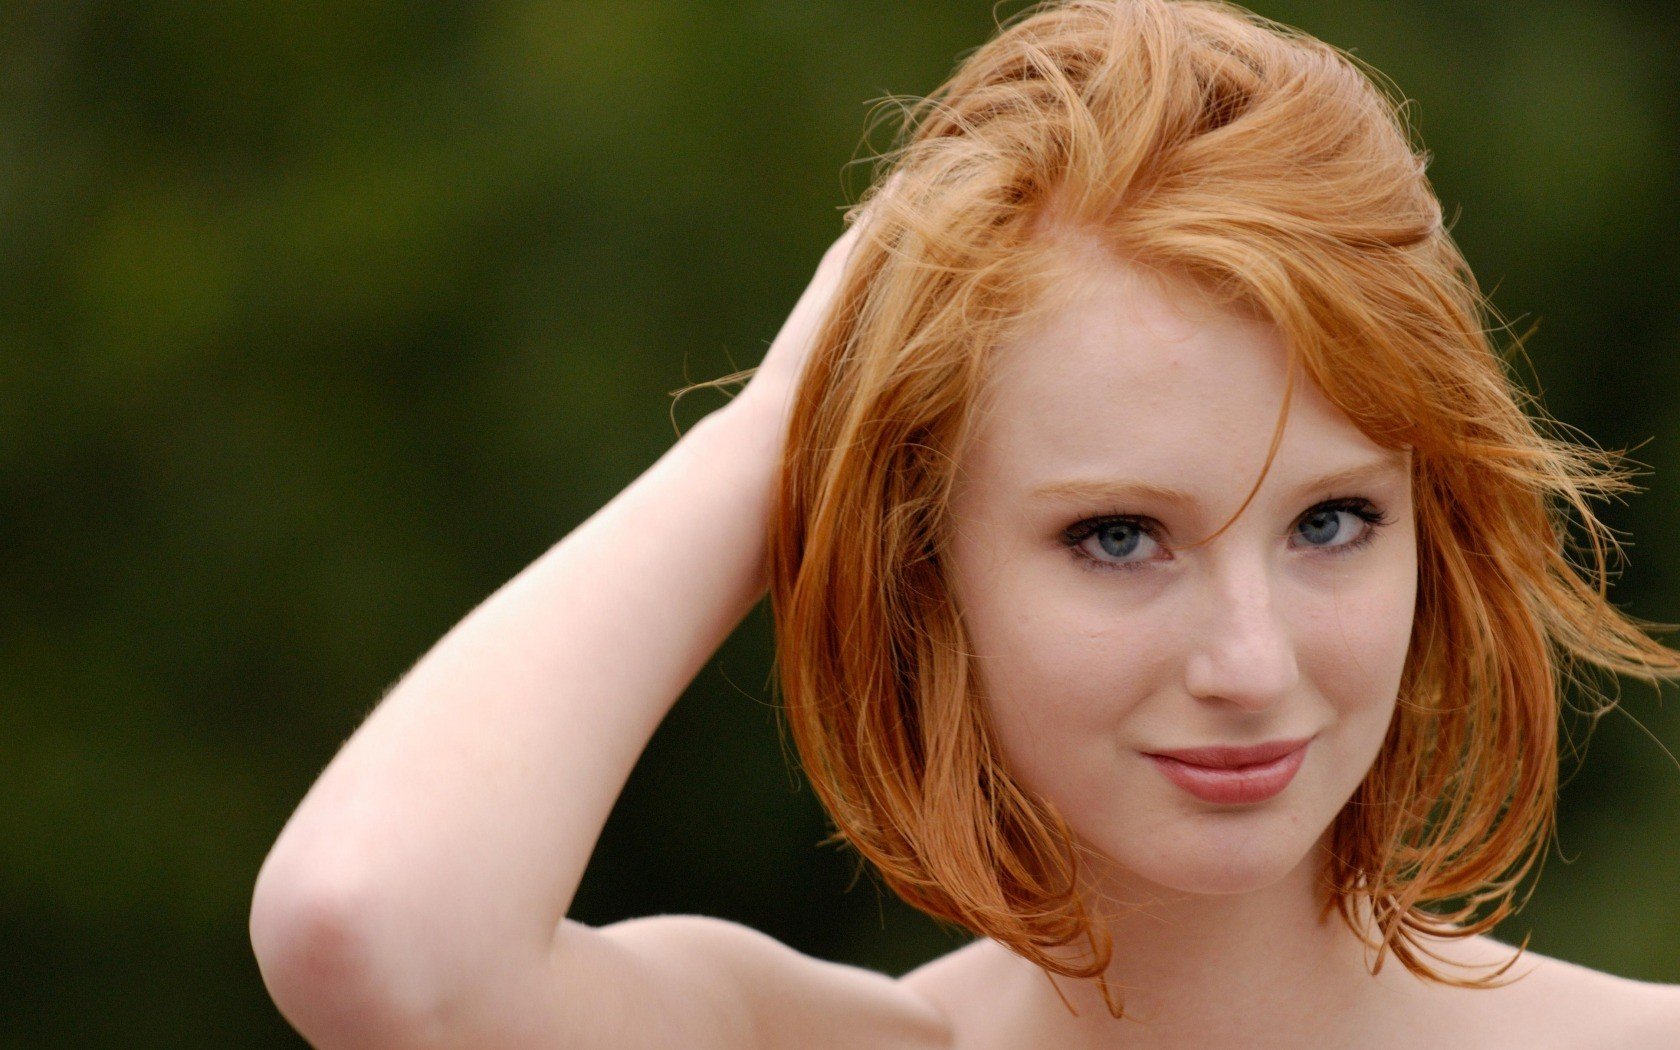 Scarlett belle redhead free porn images